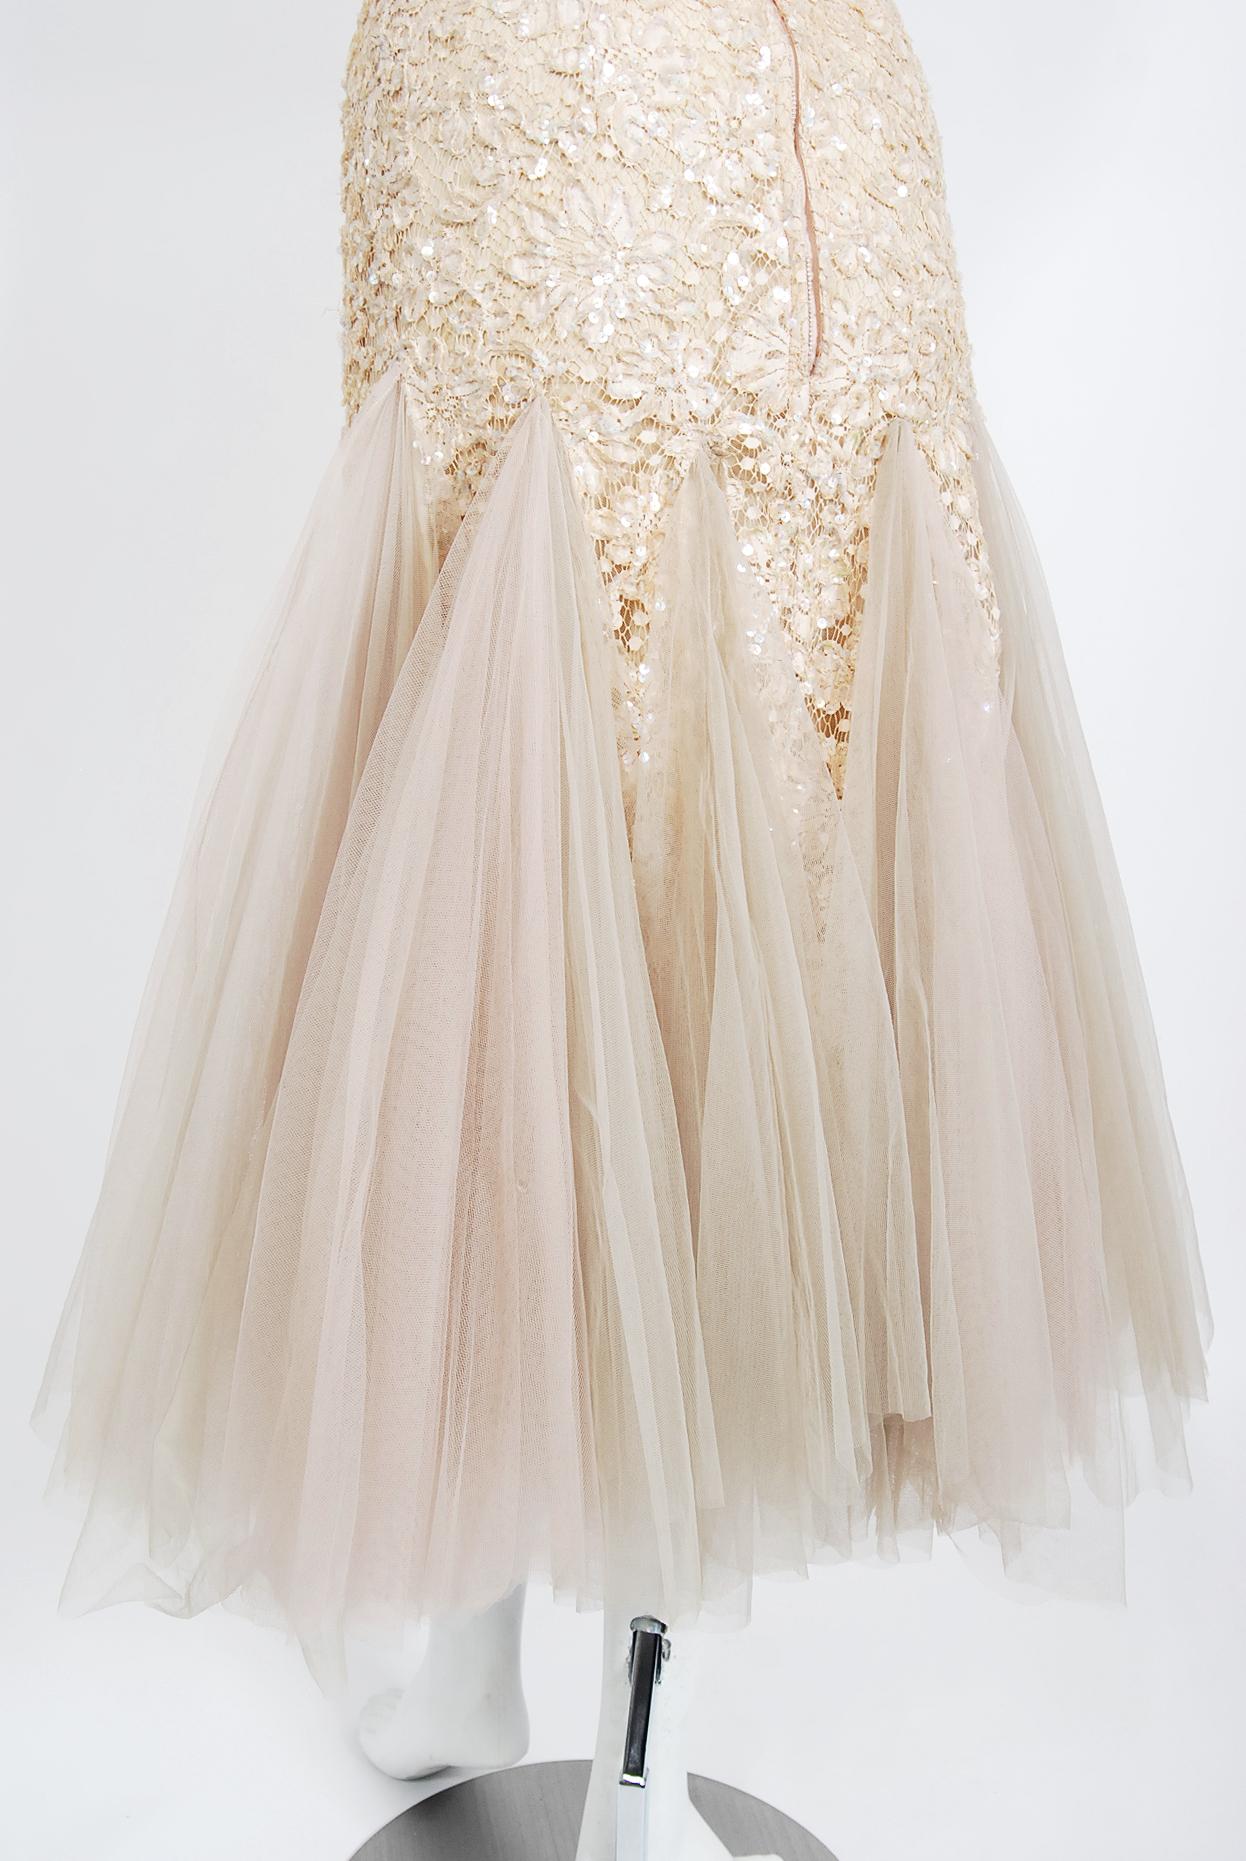 Vintage 1950's Anne Verdi Champagne Sequin Lace & Tulle Bustle Back Bridal Dress For Sale 4